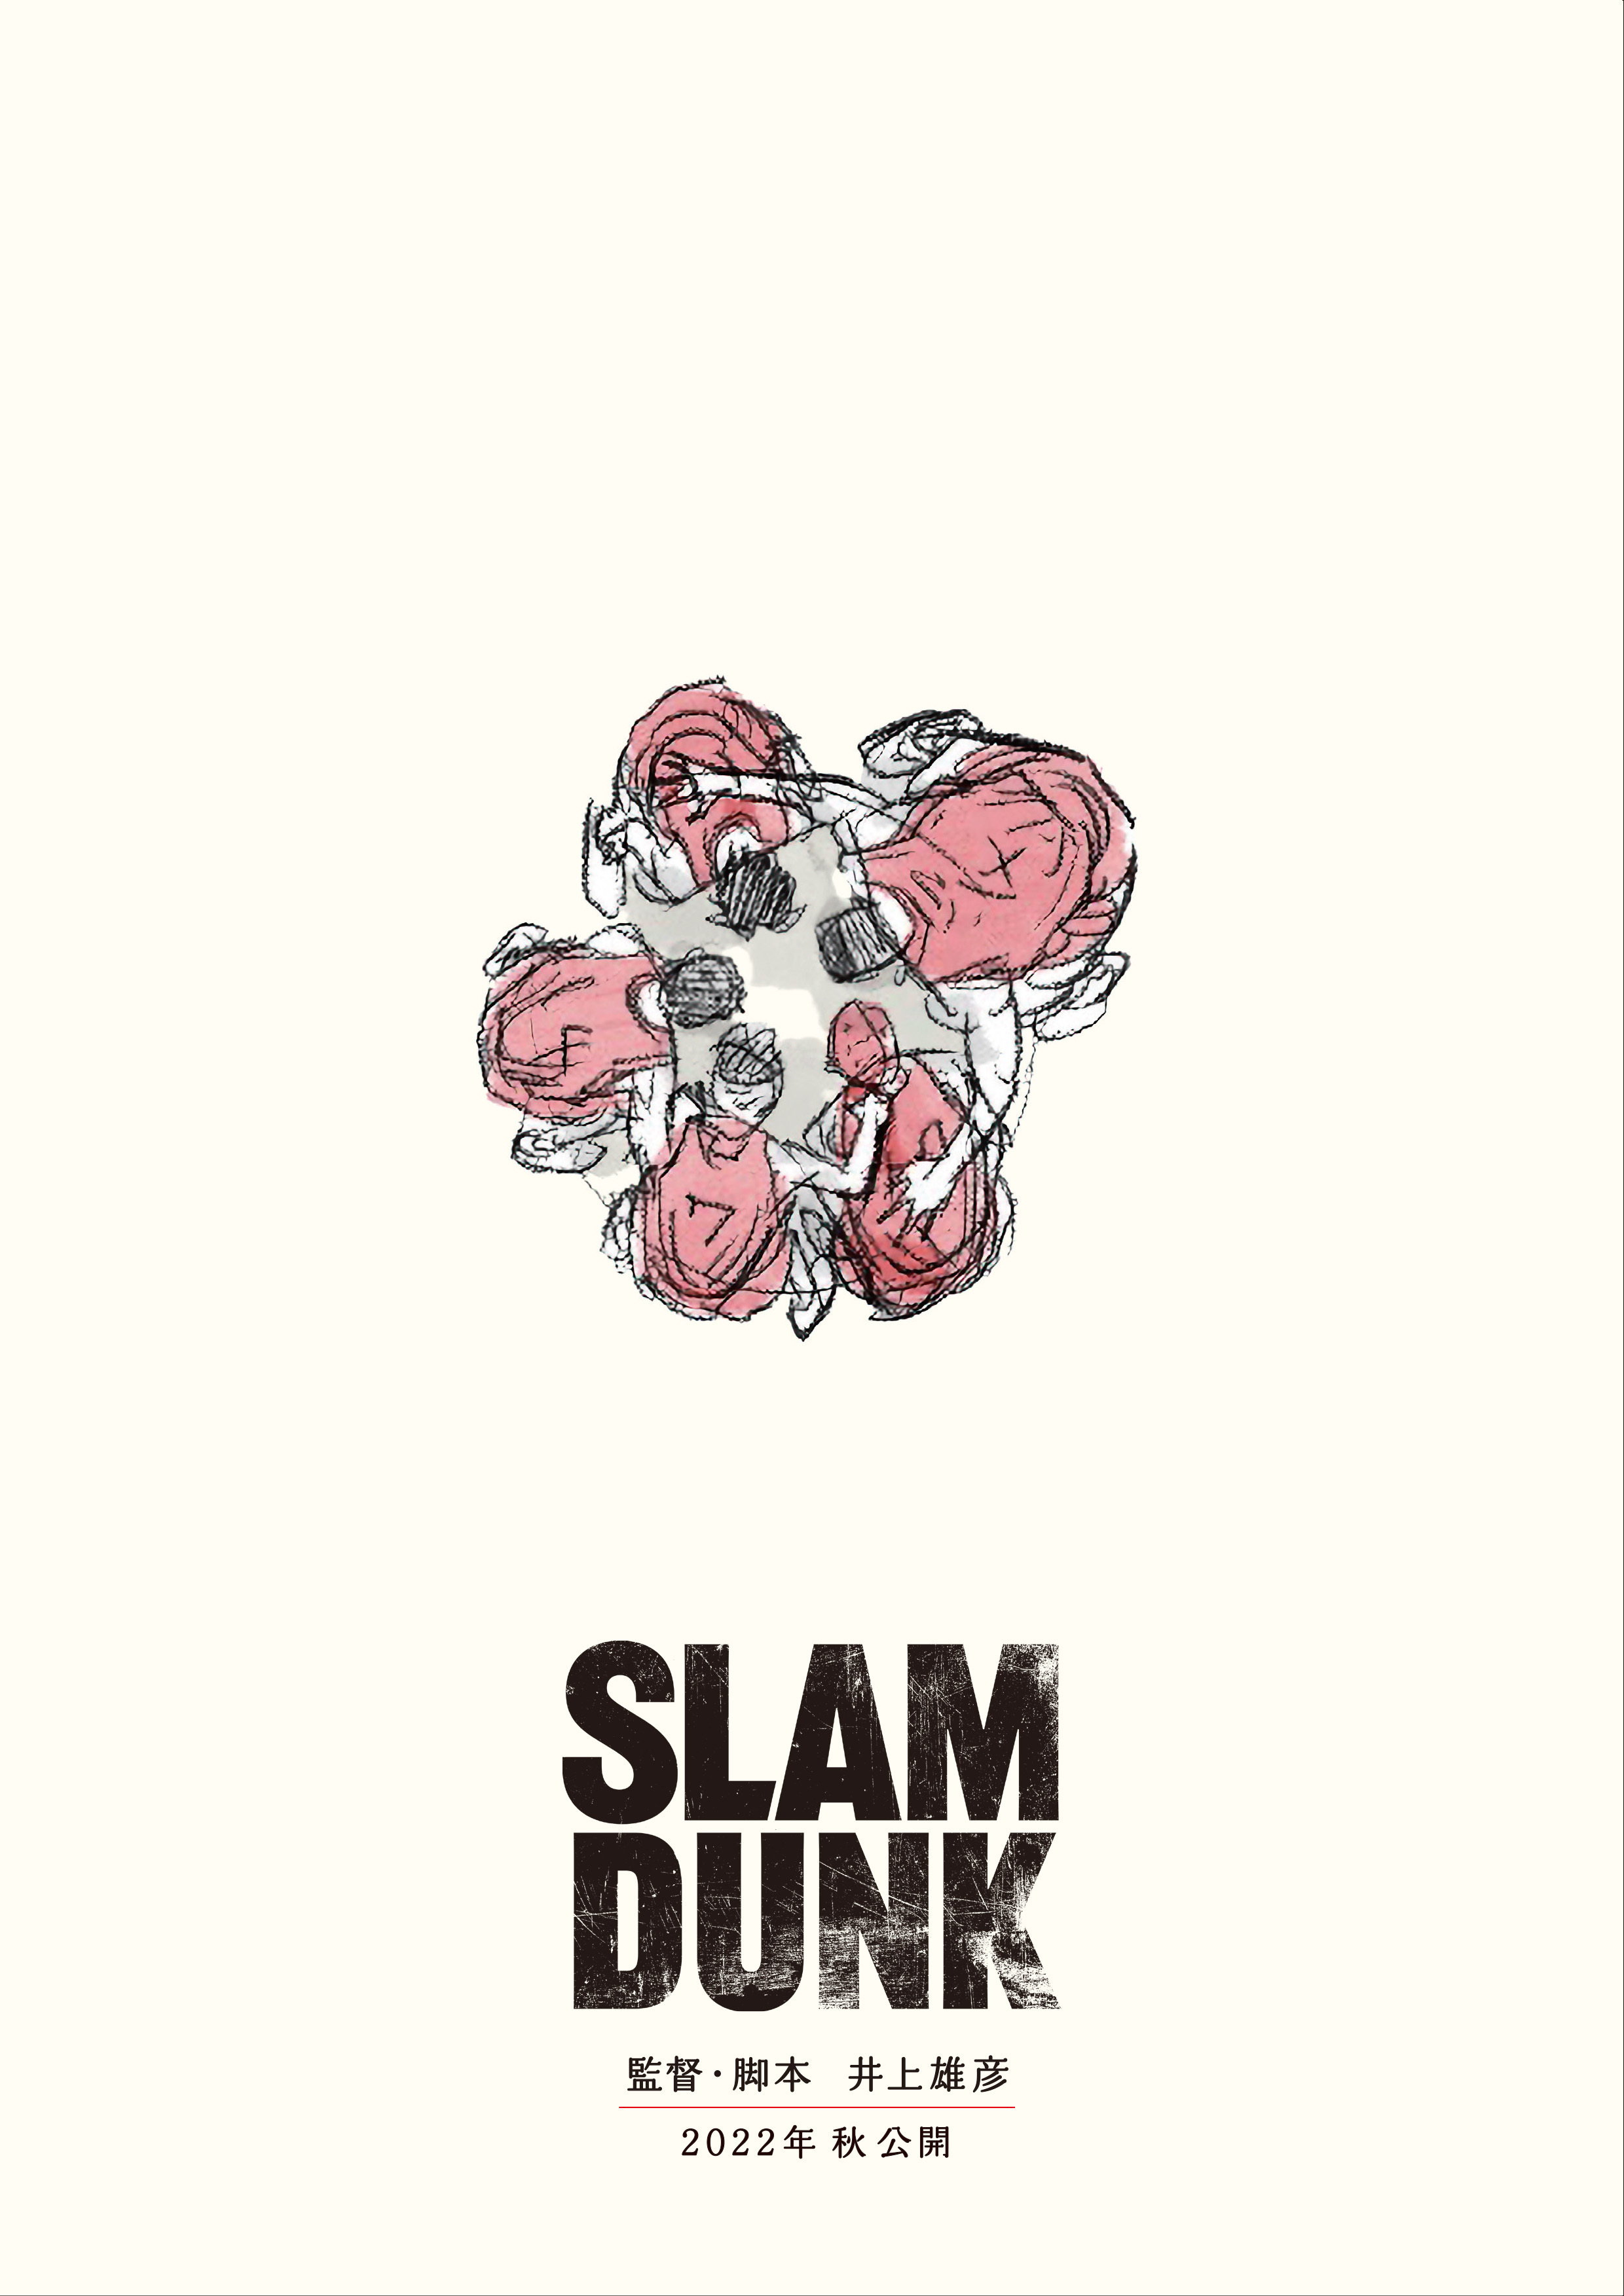 SLAM DUNK」新作アニメ映画、2022年秋に公開決定！ 監督・脚本は井上雄彦氏 GAME Watch